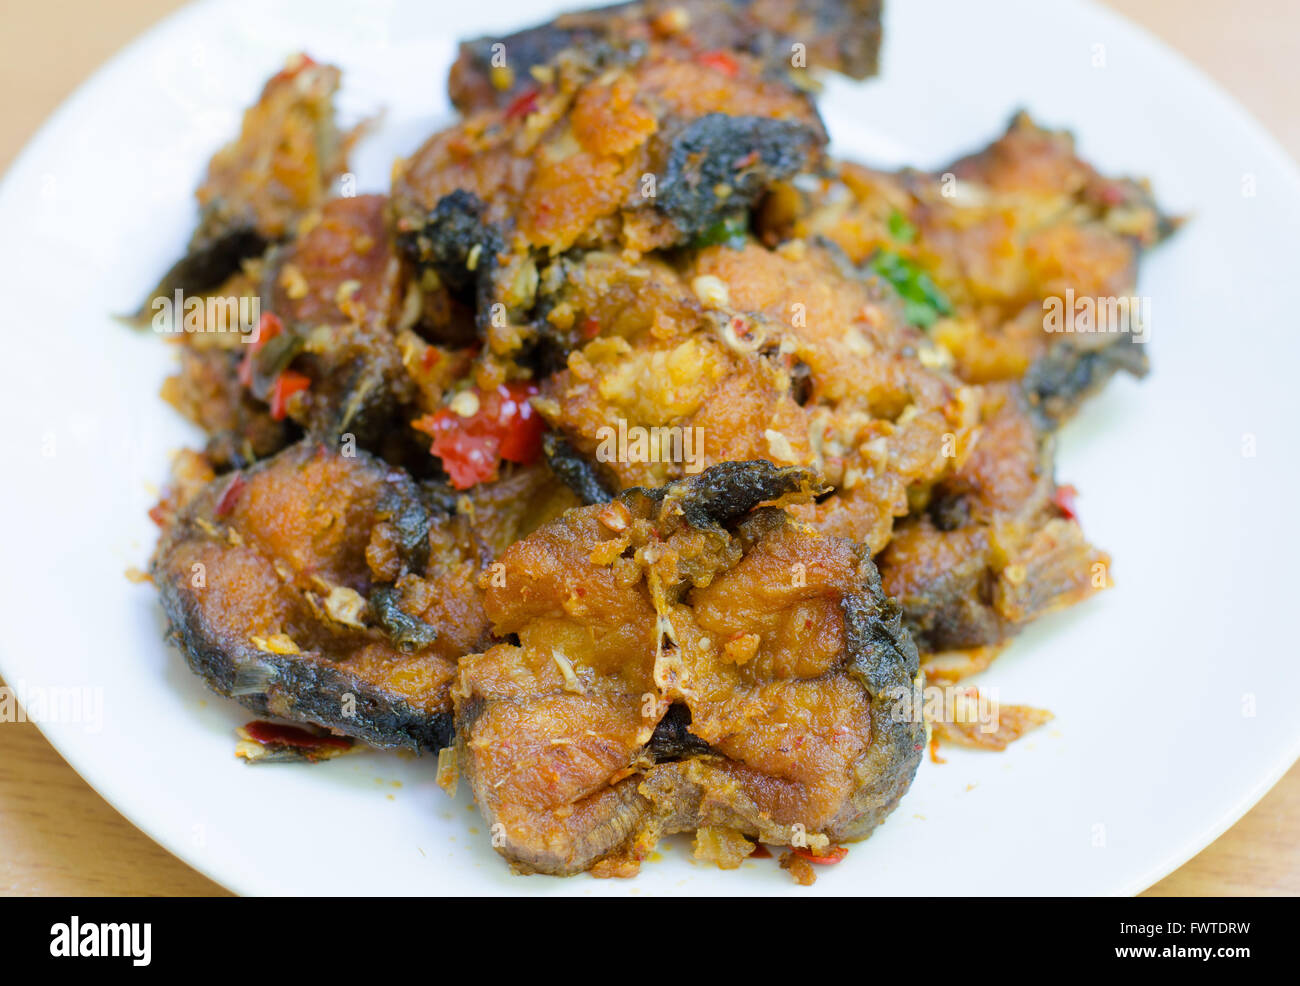 Spicy Stir Fried catfish on dish Stock Photo